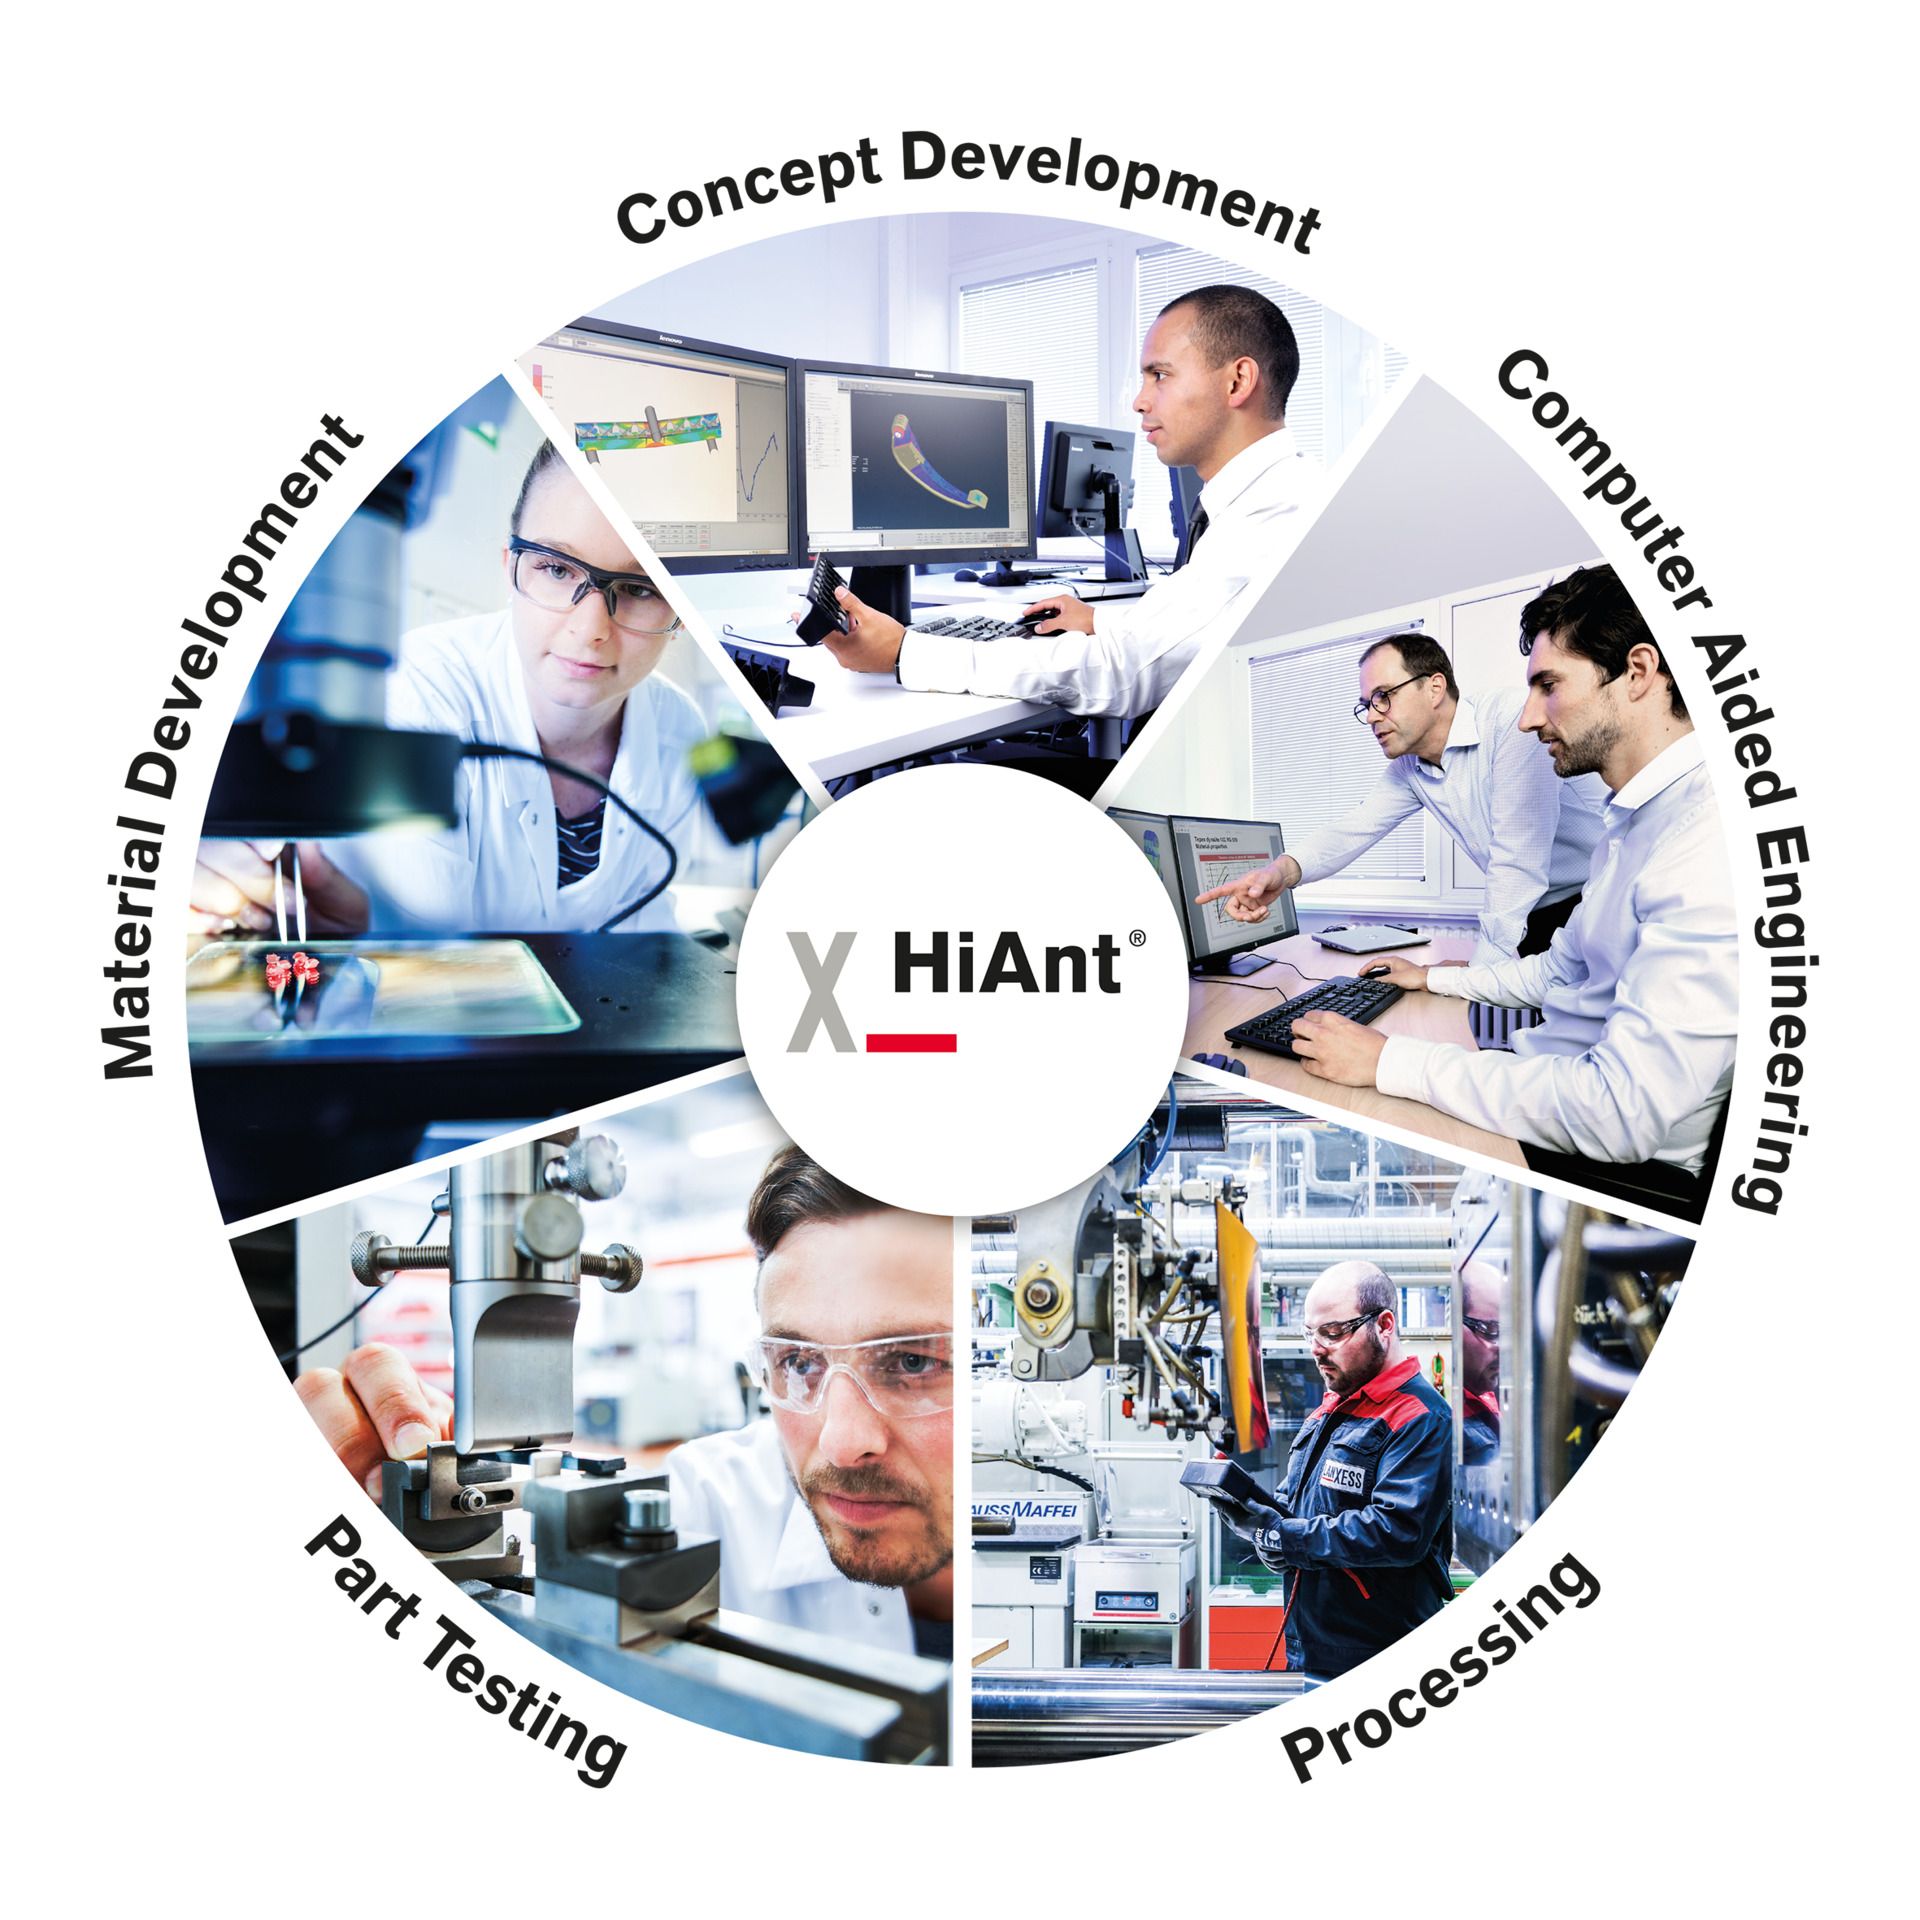 Hiant®是我们的工程服务的名称 - 它代表了材料属性和技术专业知识与互动和交际团队合作。这使我们能够在组件开发的所有阶段支持客户。直接合作，完全根据您的个人要求。这是代表此服务的圆圈。